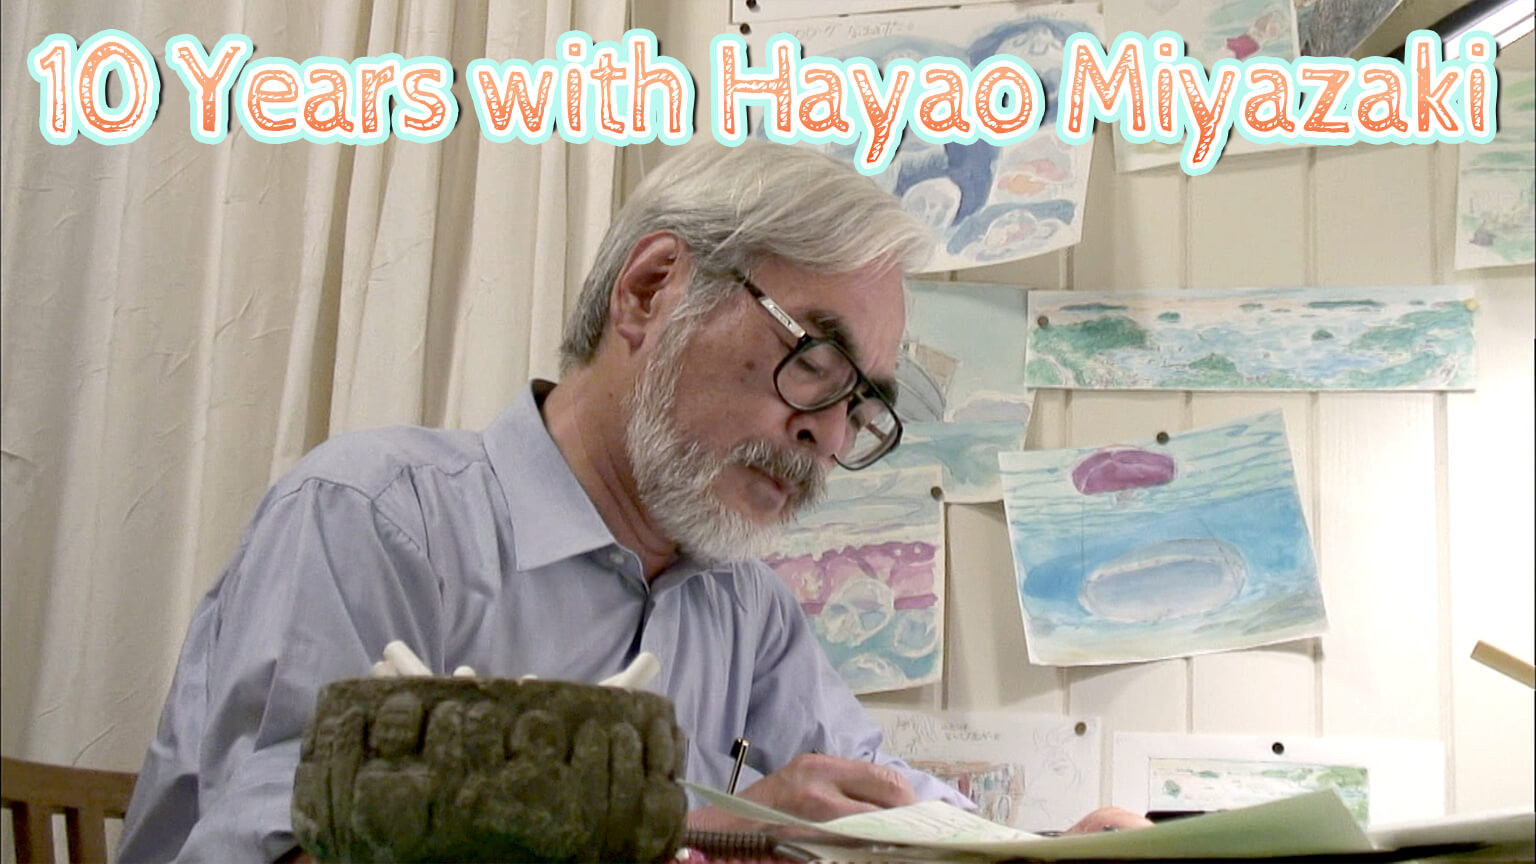 宫崎骏：十载同行
10 Years with Hayao Miyazaki